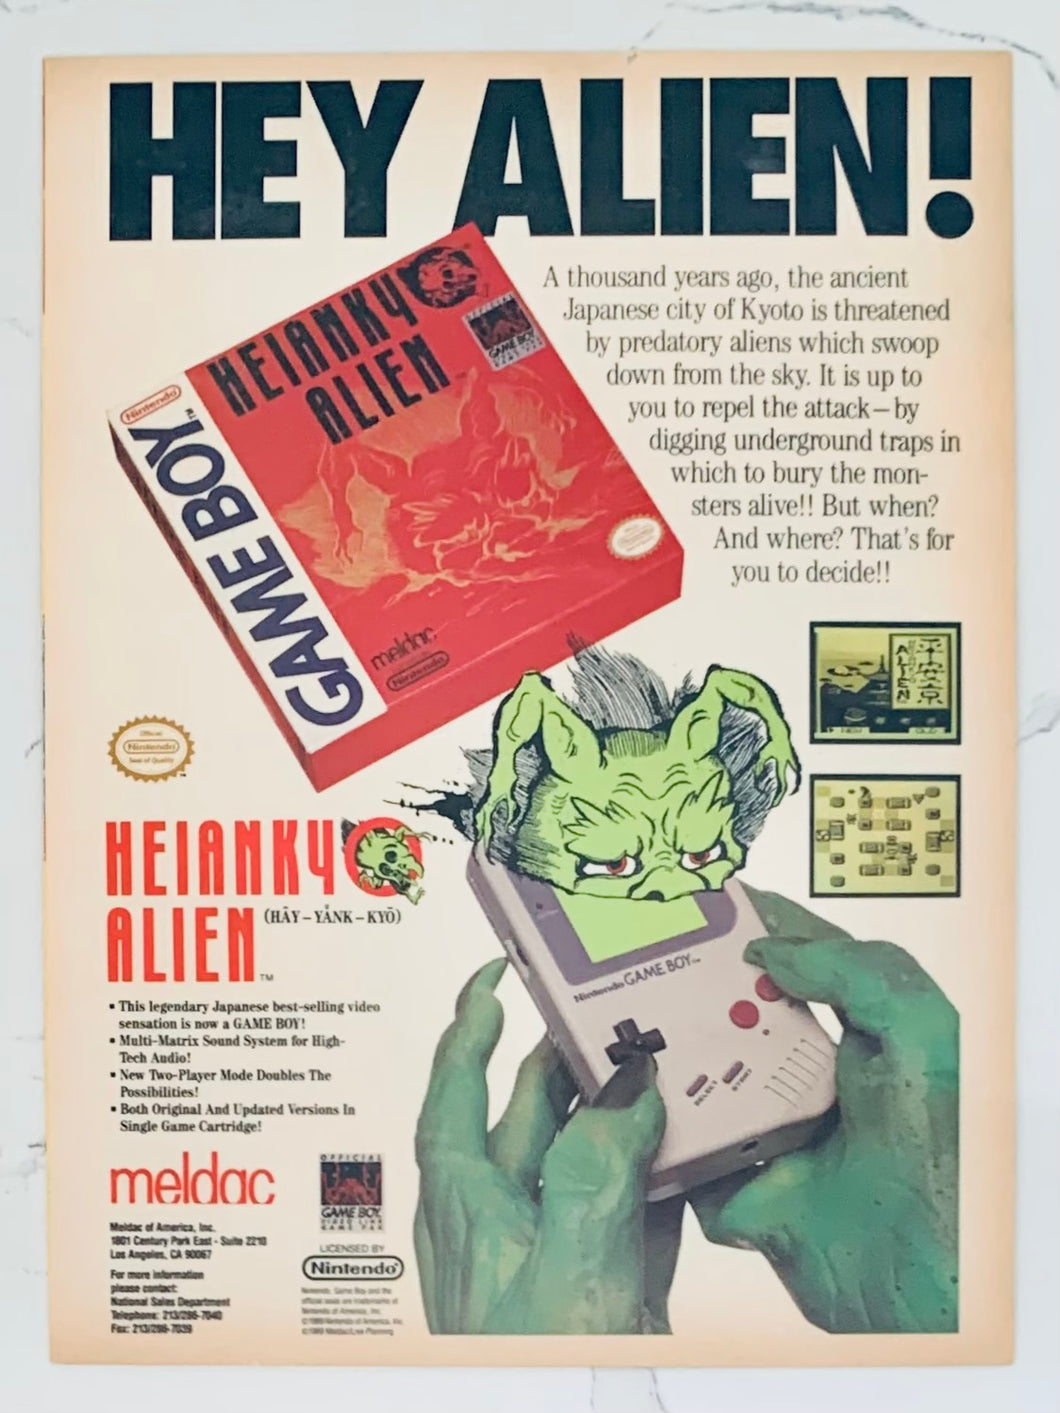 Heiankyo Alien - Gameboy - Original Vintage Advertisement - Print Ads - Laminated A4 Poster